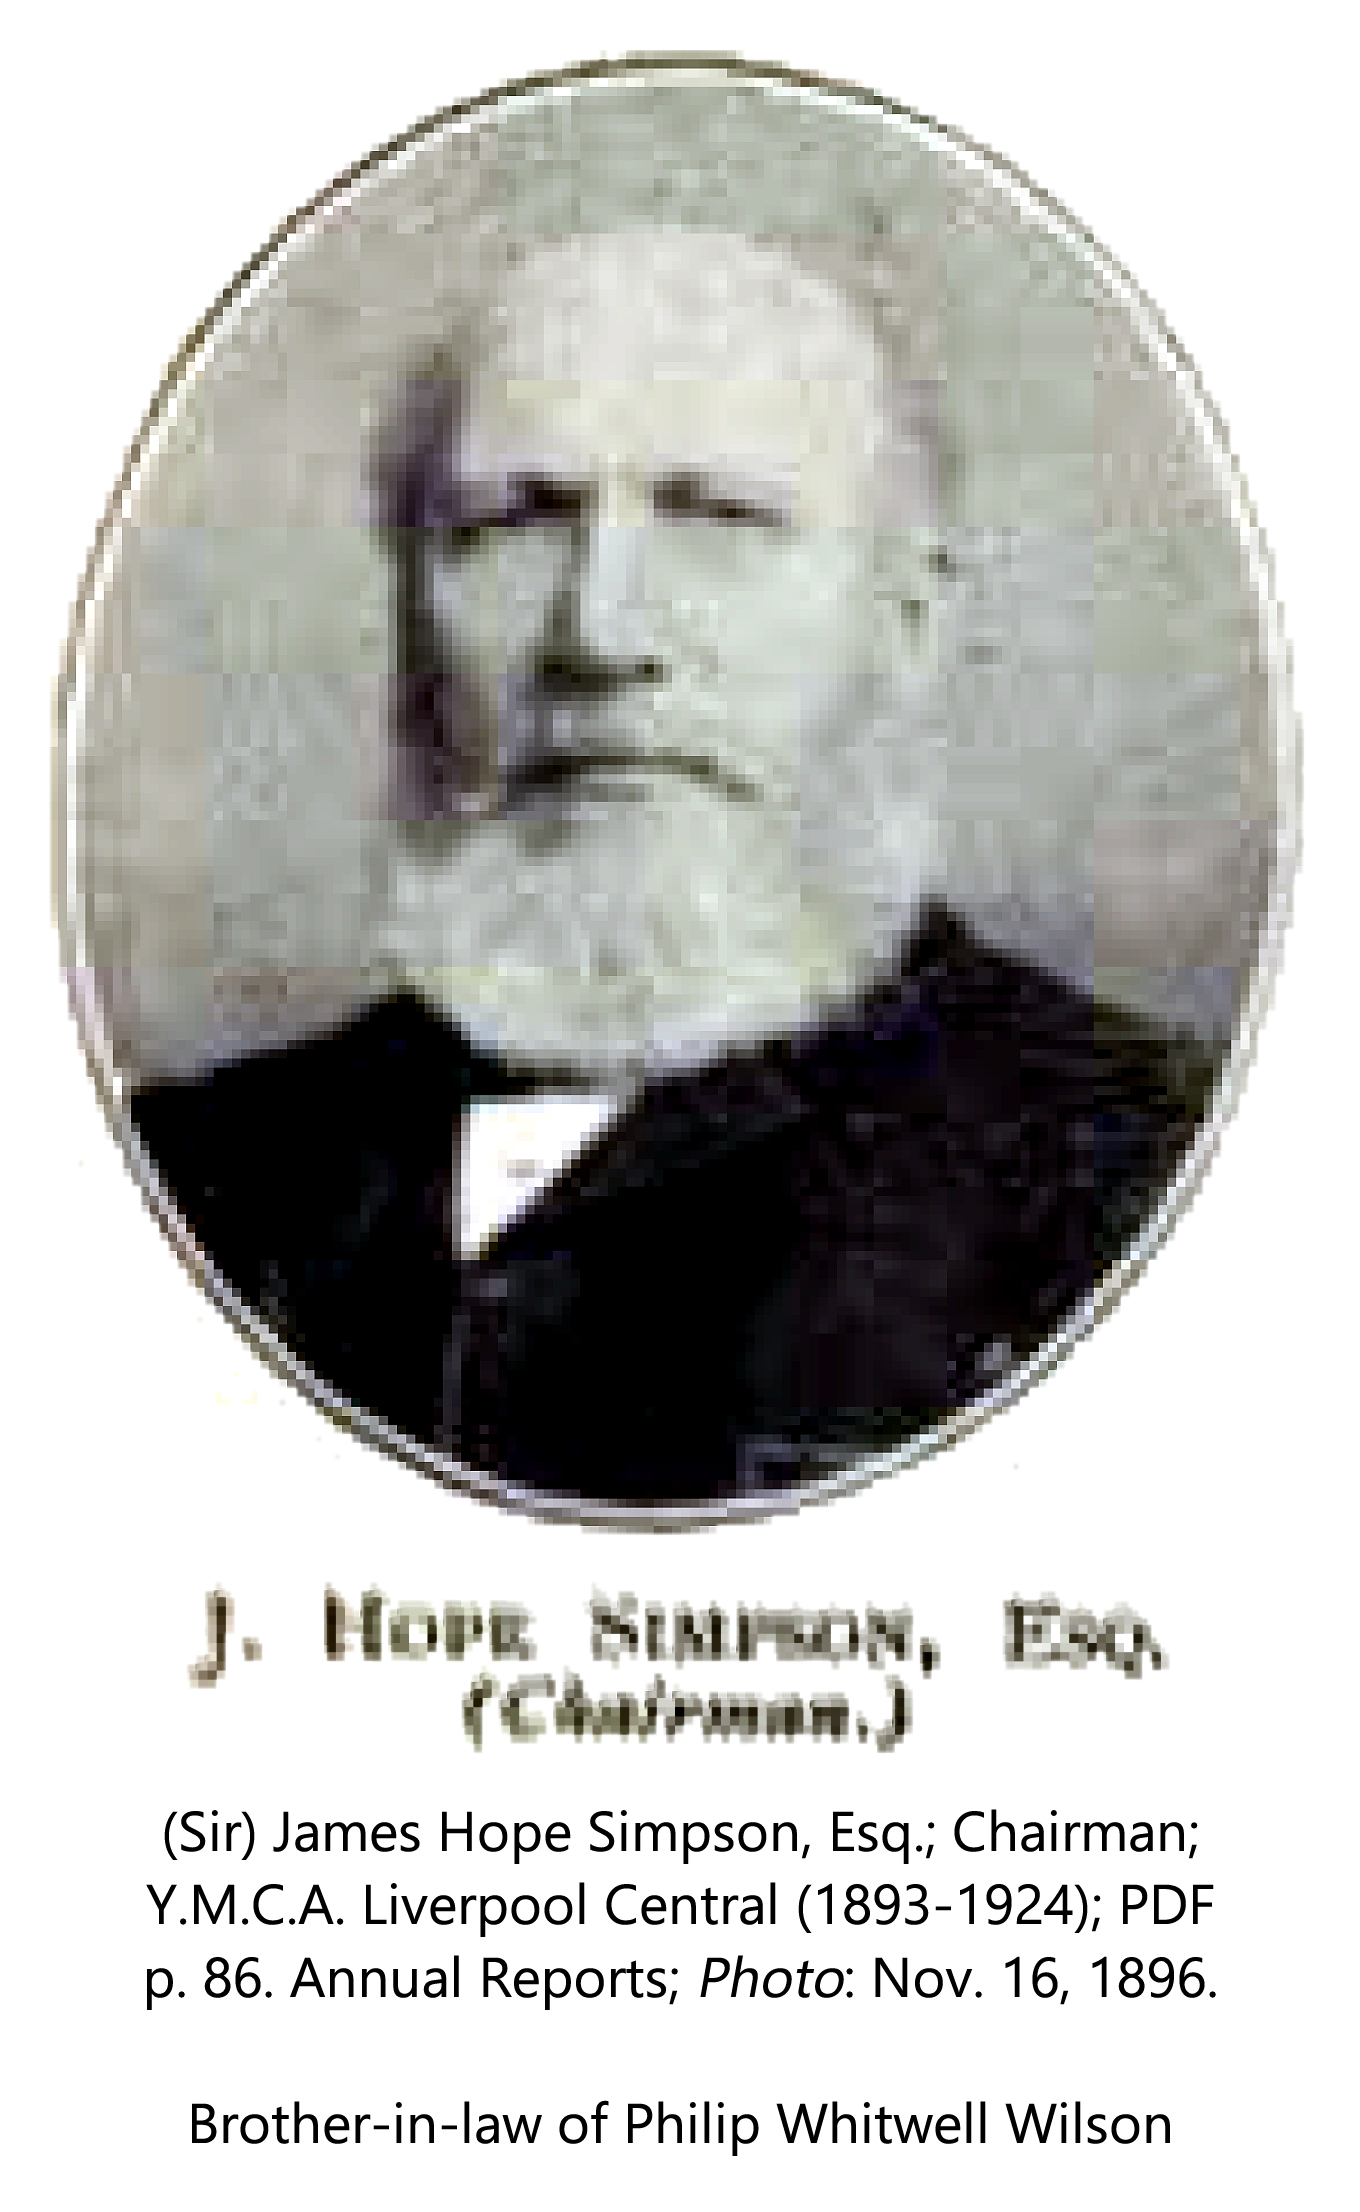 (Sir) James Hope Simpson, Esq.; Chairman; Y.M.C.A. Liverpool Central (1893-1924); Y.M.C.A. Liverpool Central UK (1896), PDF p. 86. Annual Reports; Photo: Nov. 16, 1896. 